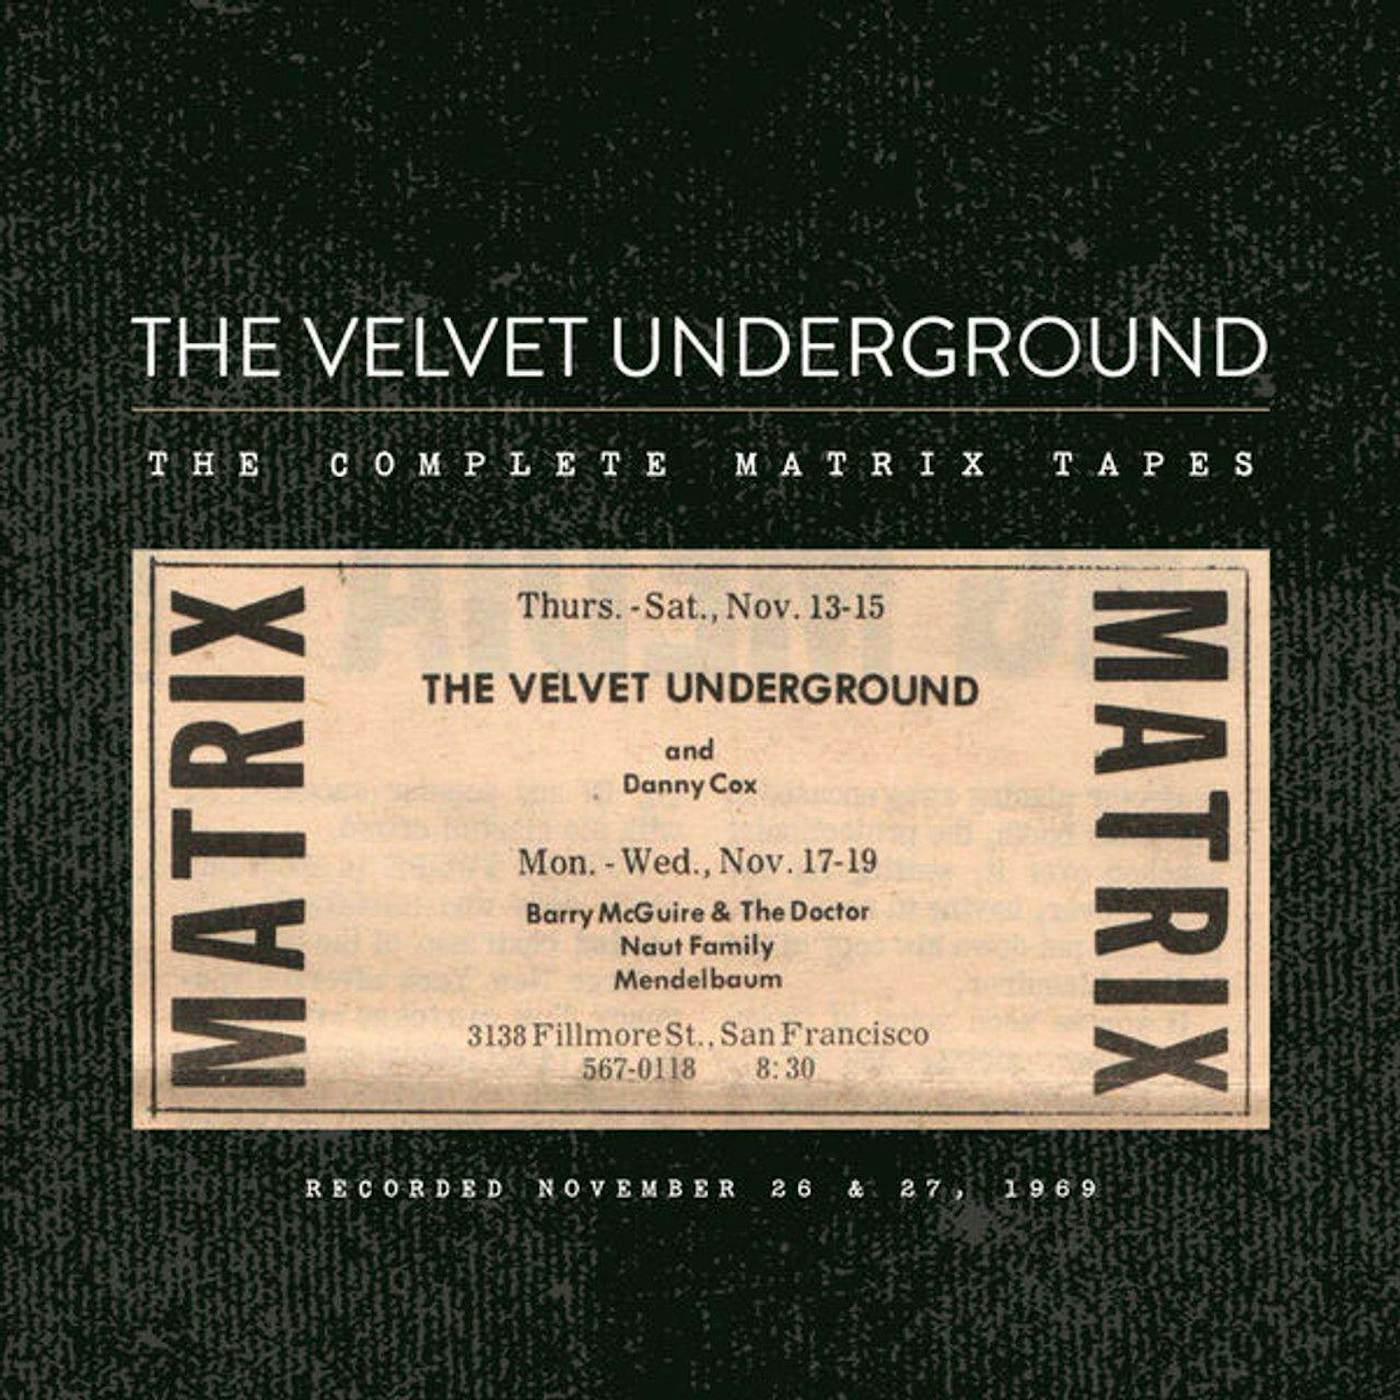 The Velvet Underground Complete Matrix Tapes (8LP) Vinyl Record